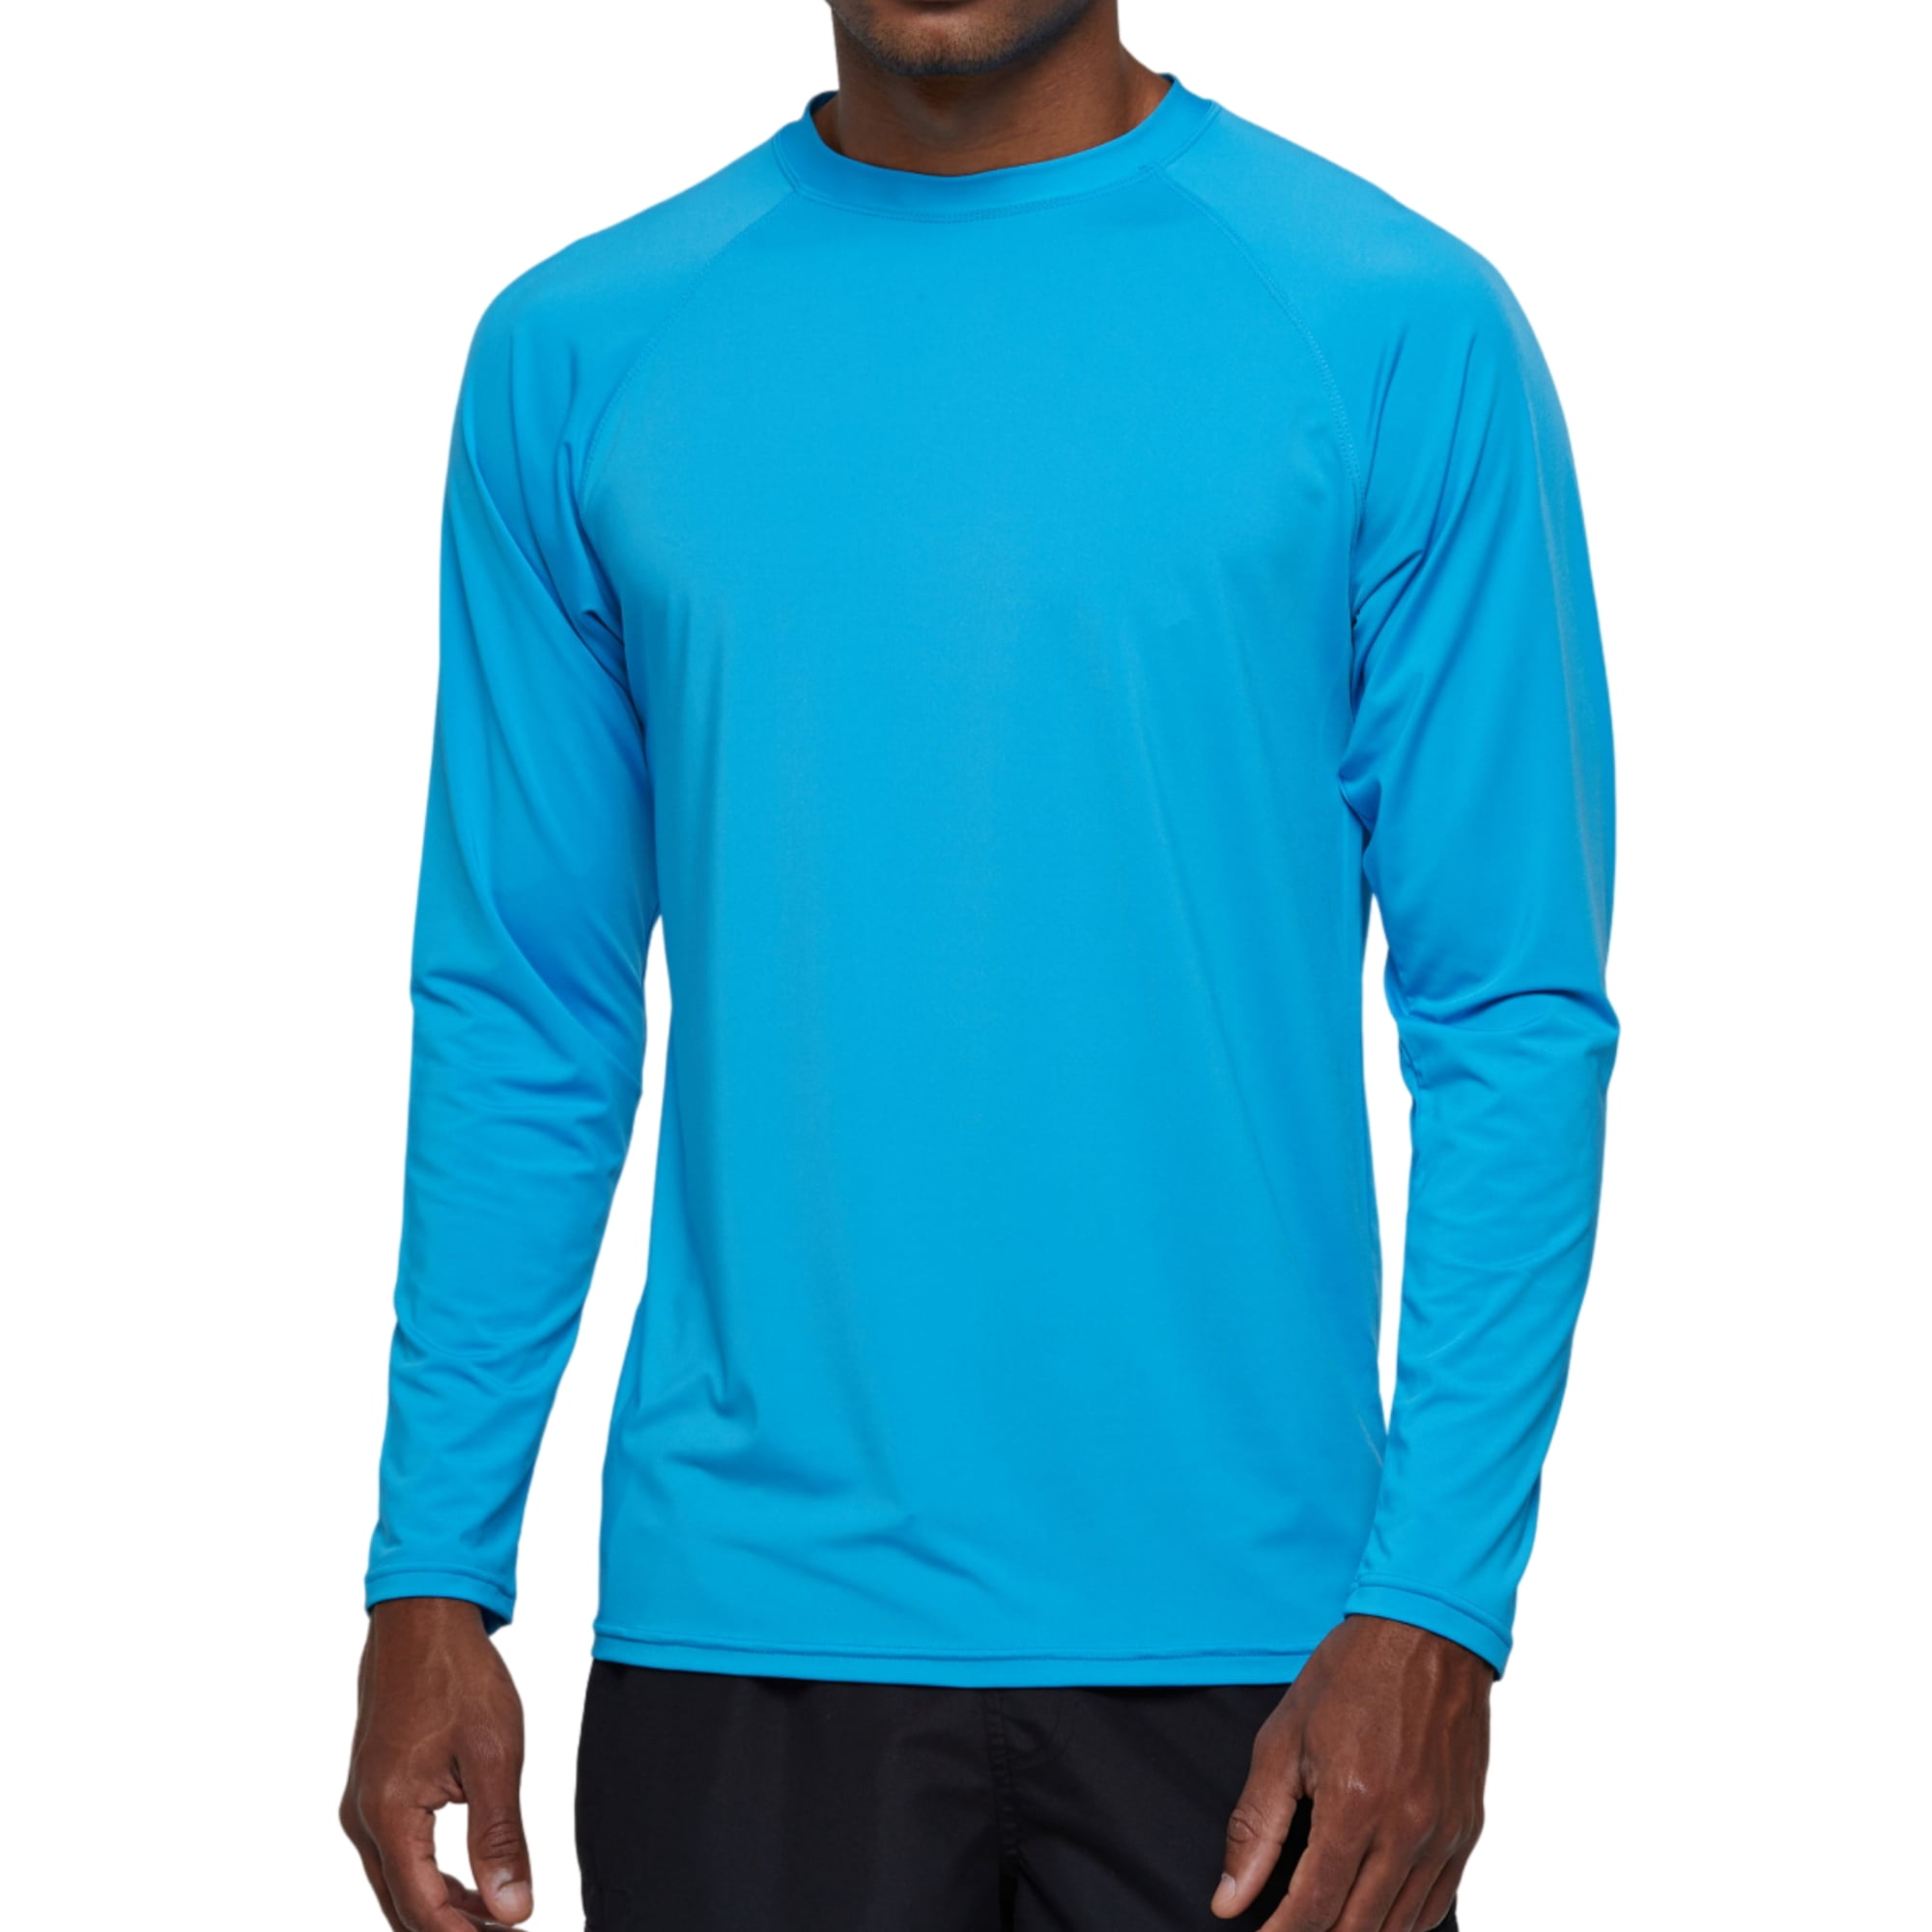 LRD Fishing Shirts for Men Long Sleeve UPF 50 Sun Protection Performance  Shirt Redfish Gray - XXXL 